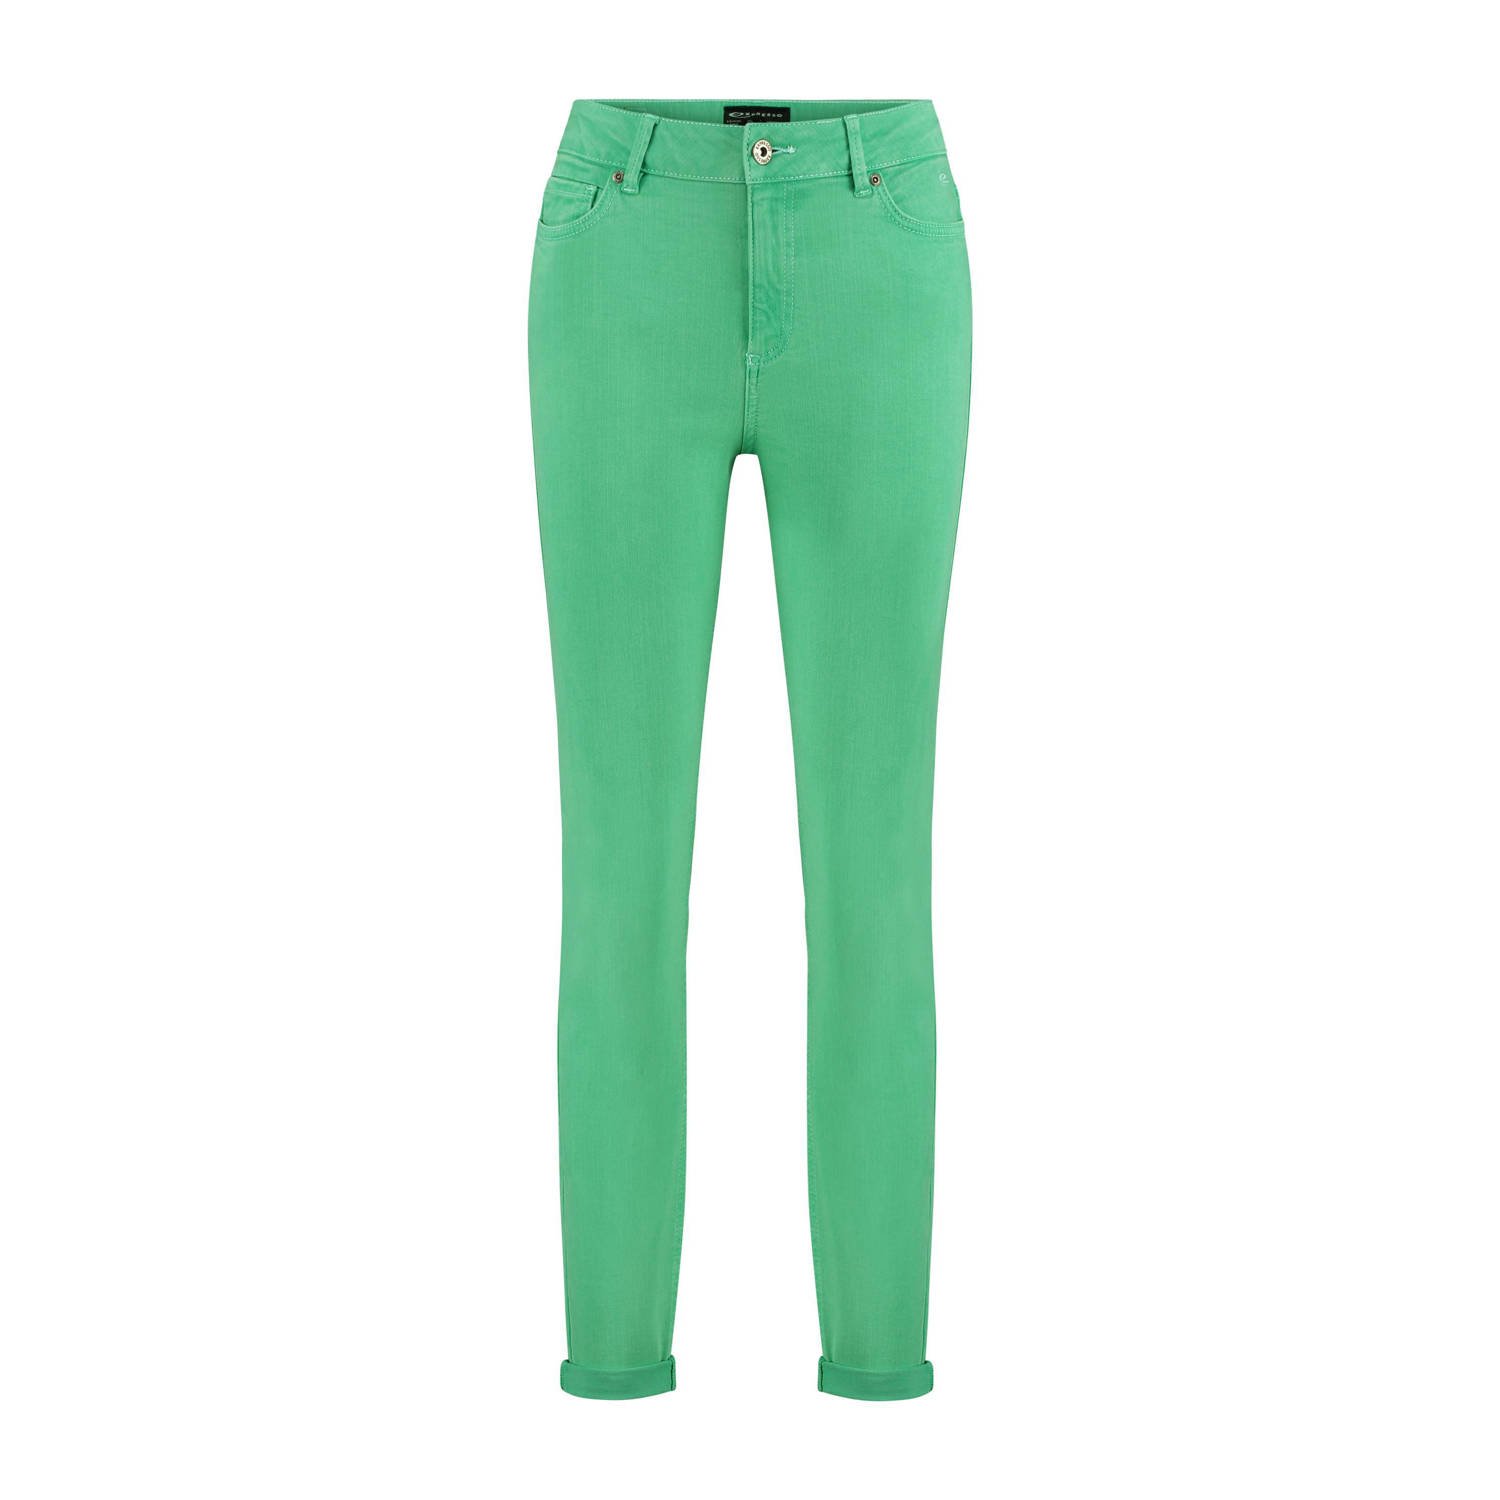 Expresso skinny jeans groen